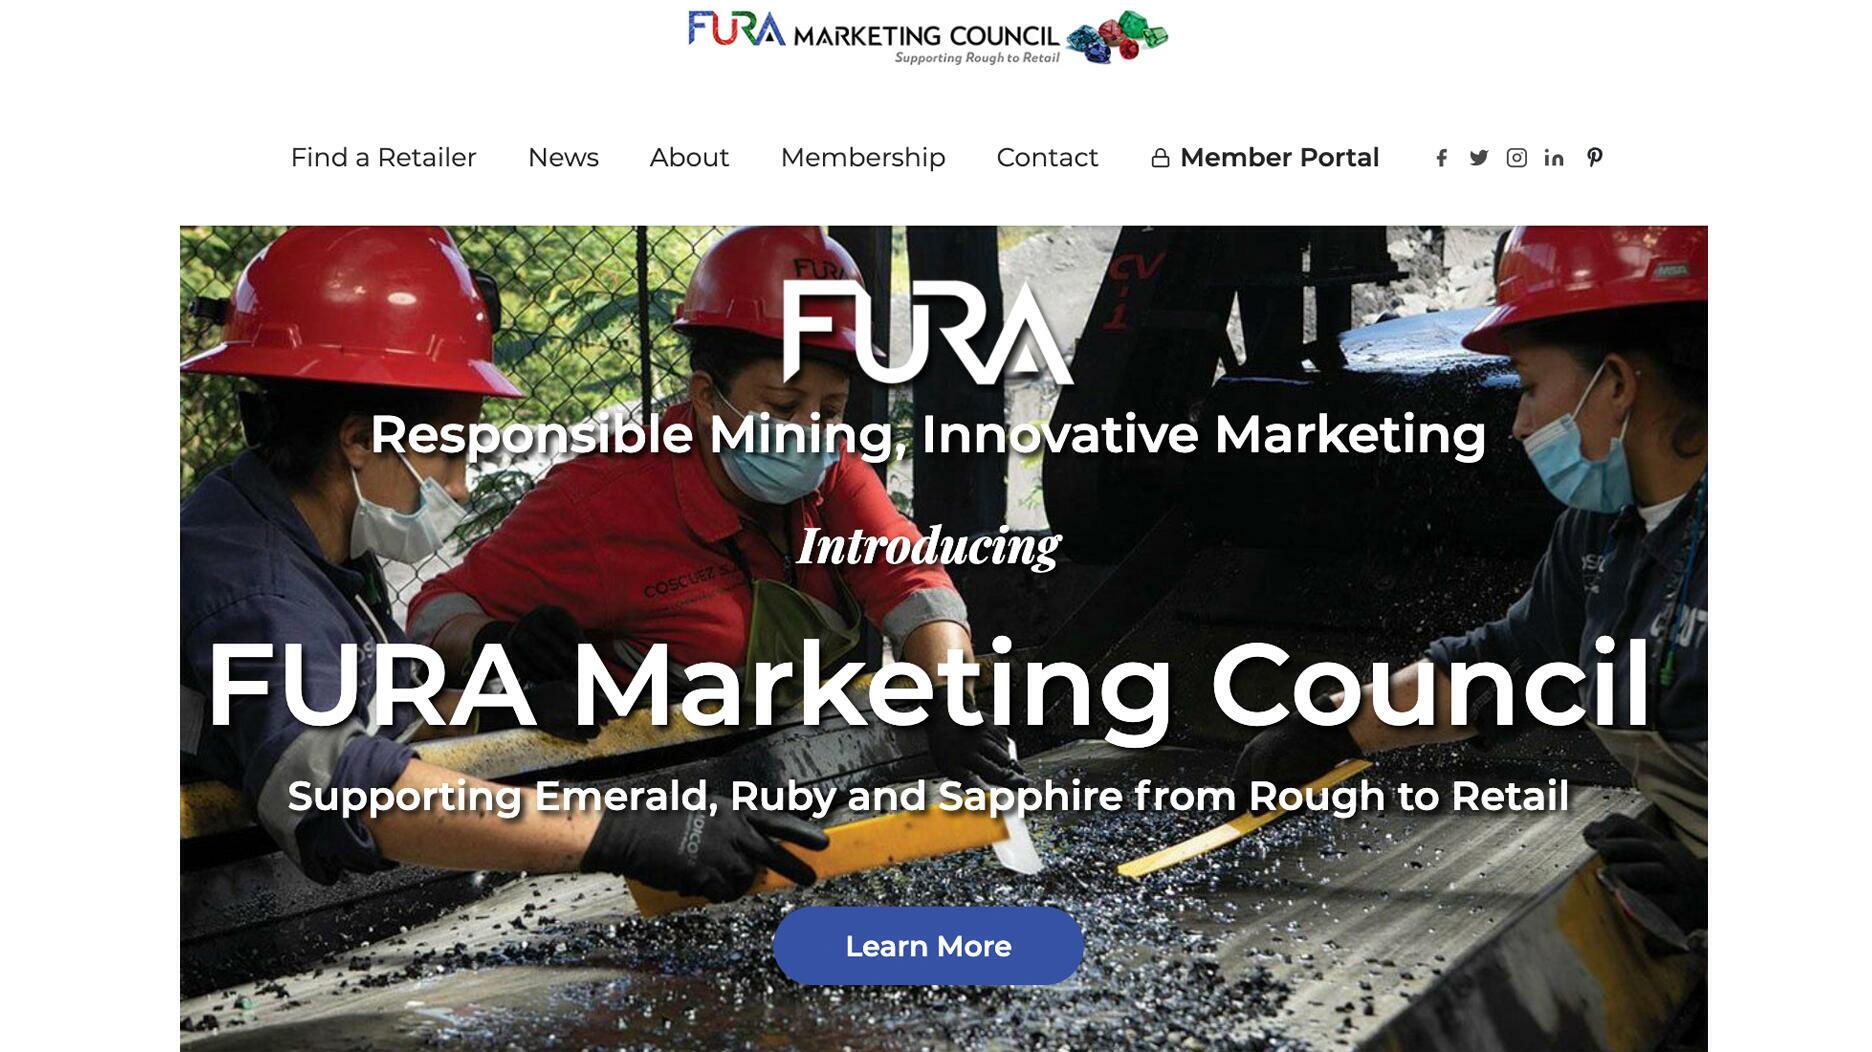 20210730_Fura-Marketing-Council.jpg